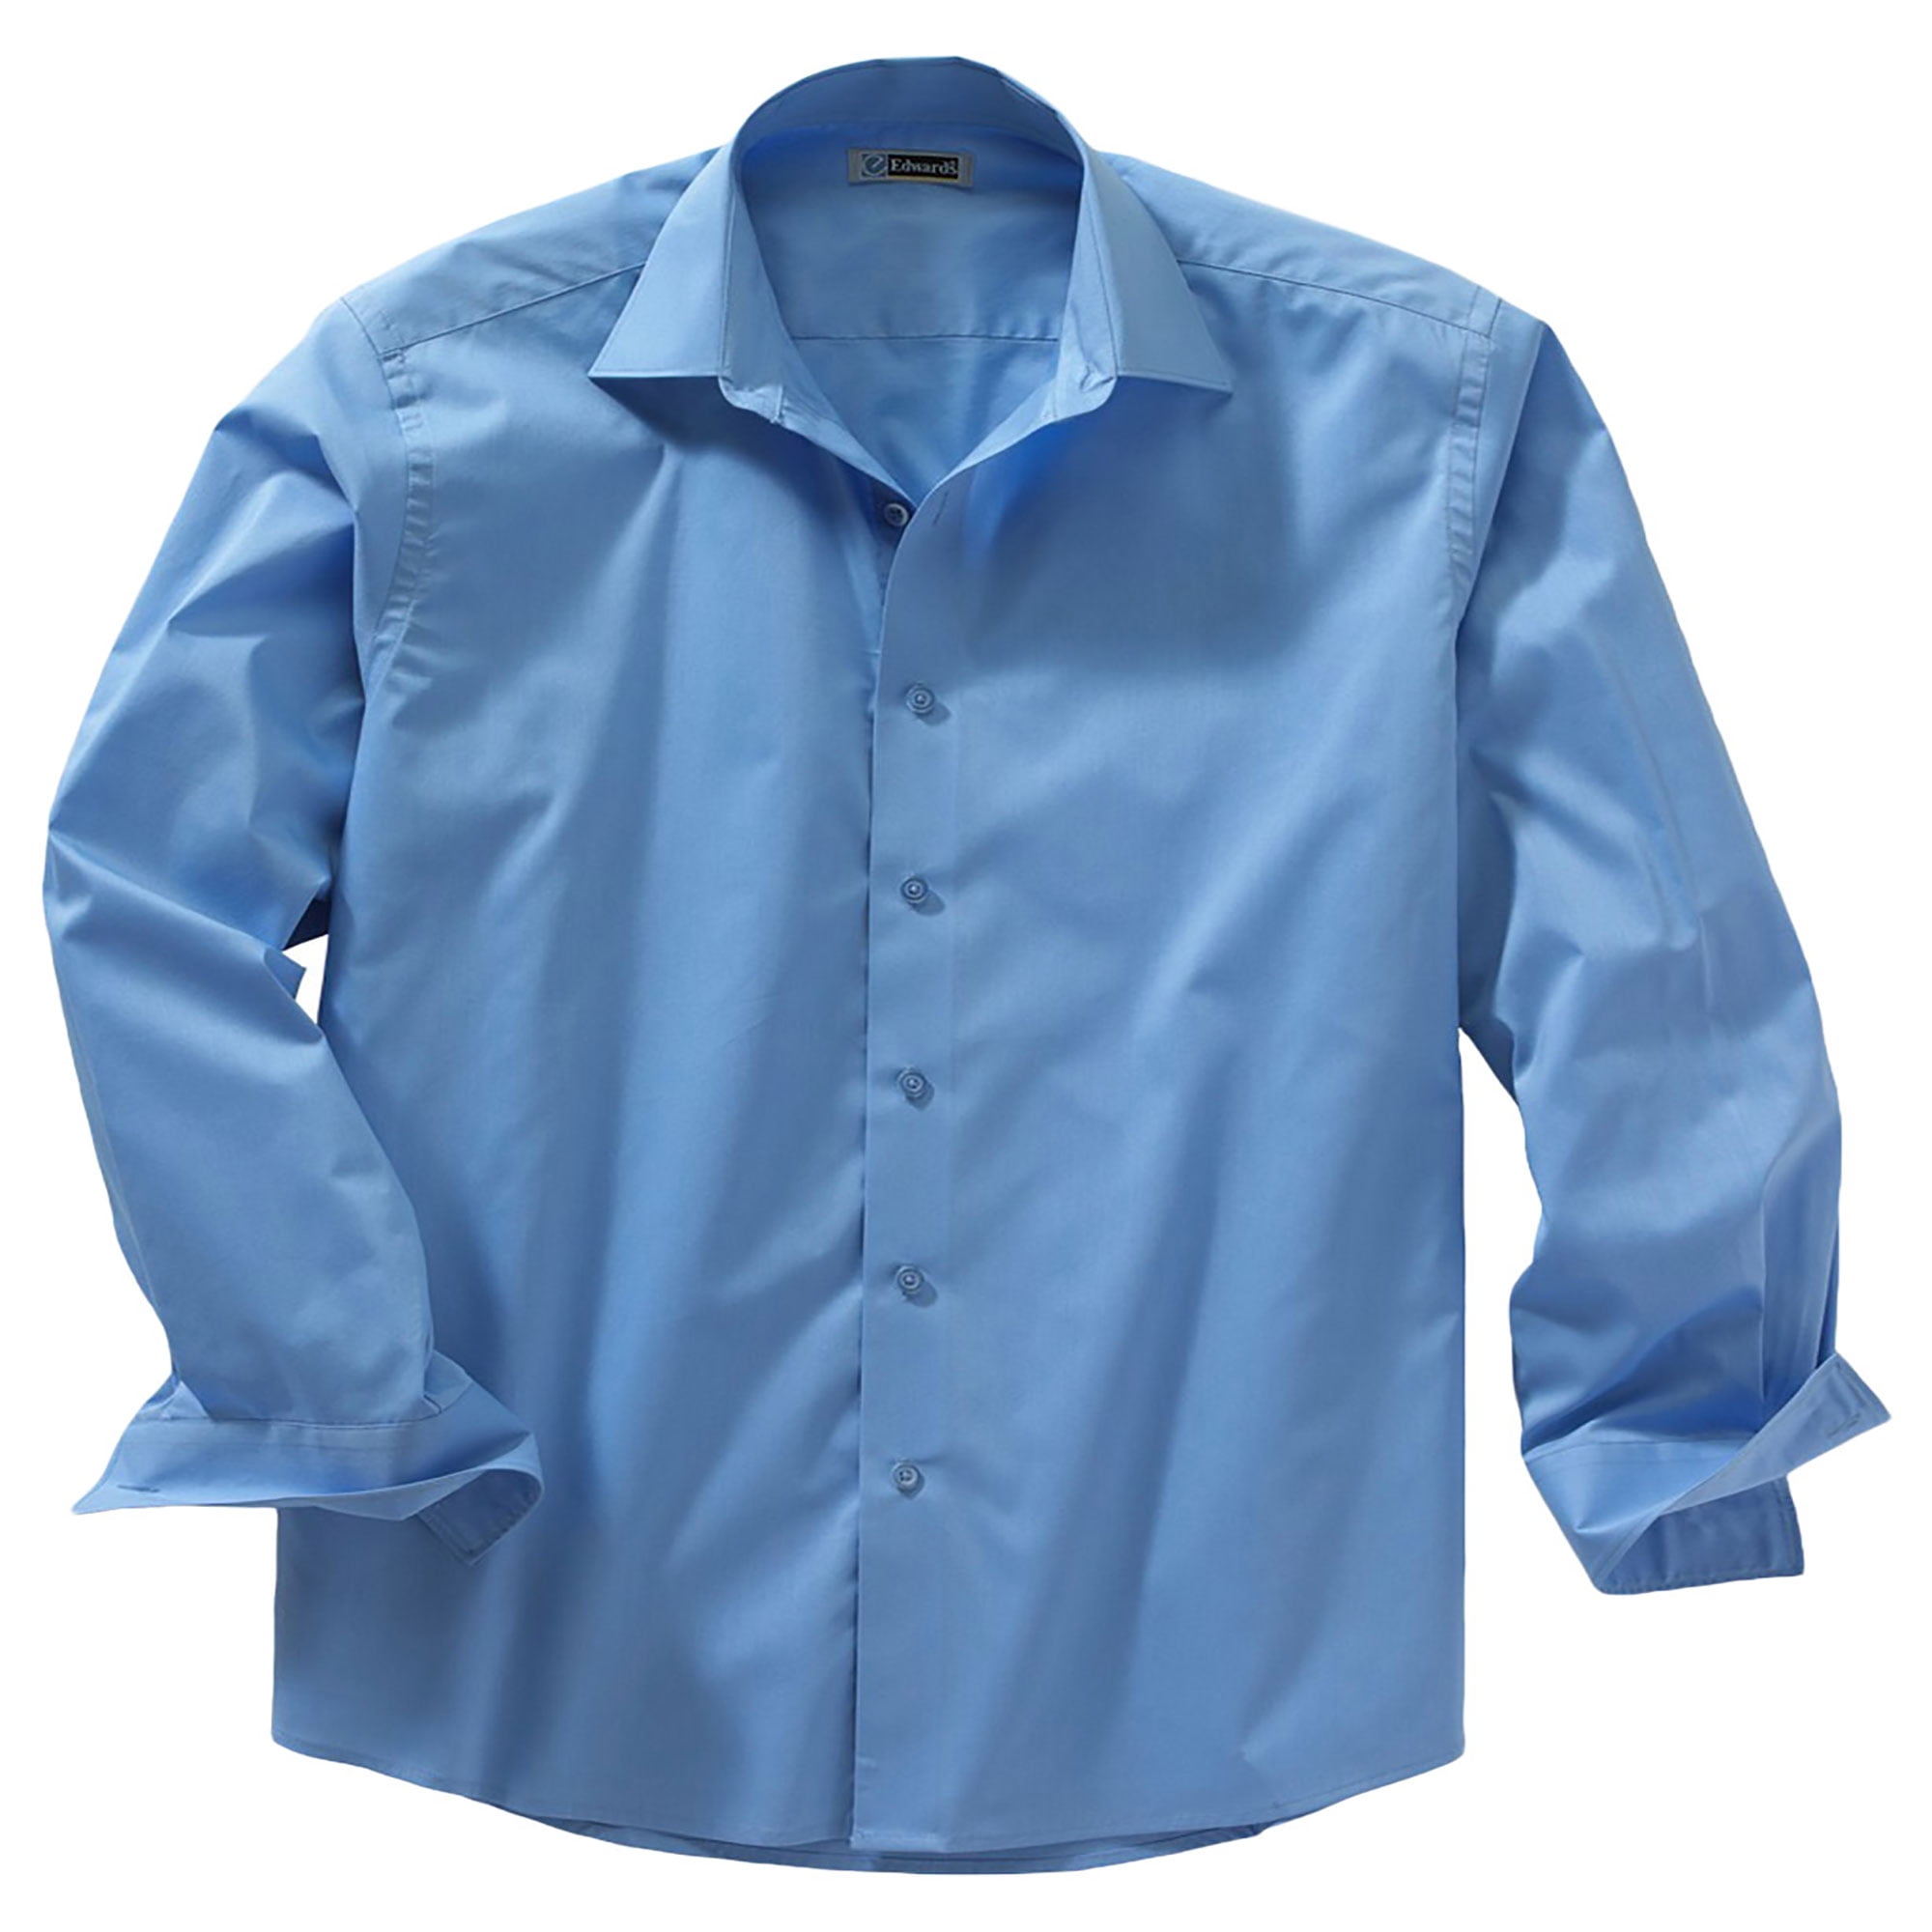 $145 IKE BEHAR BLUE/LAVENDER 100% Cotton Dress Shirt Size 14 1/2-32/33 